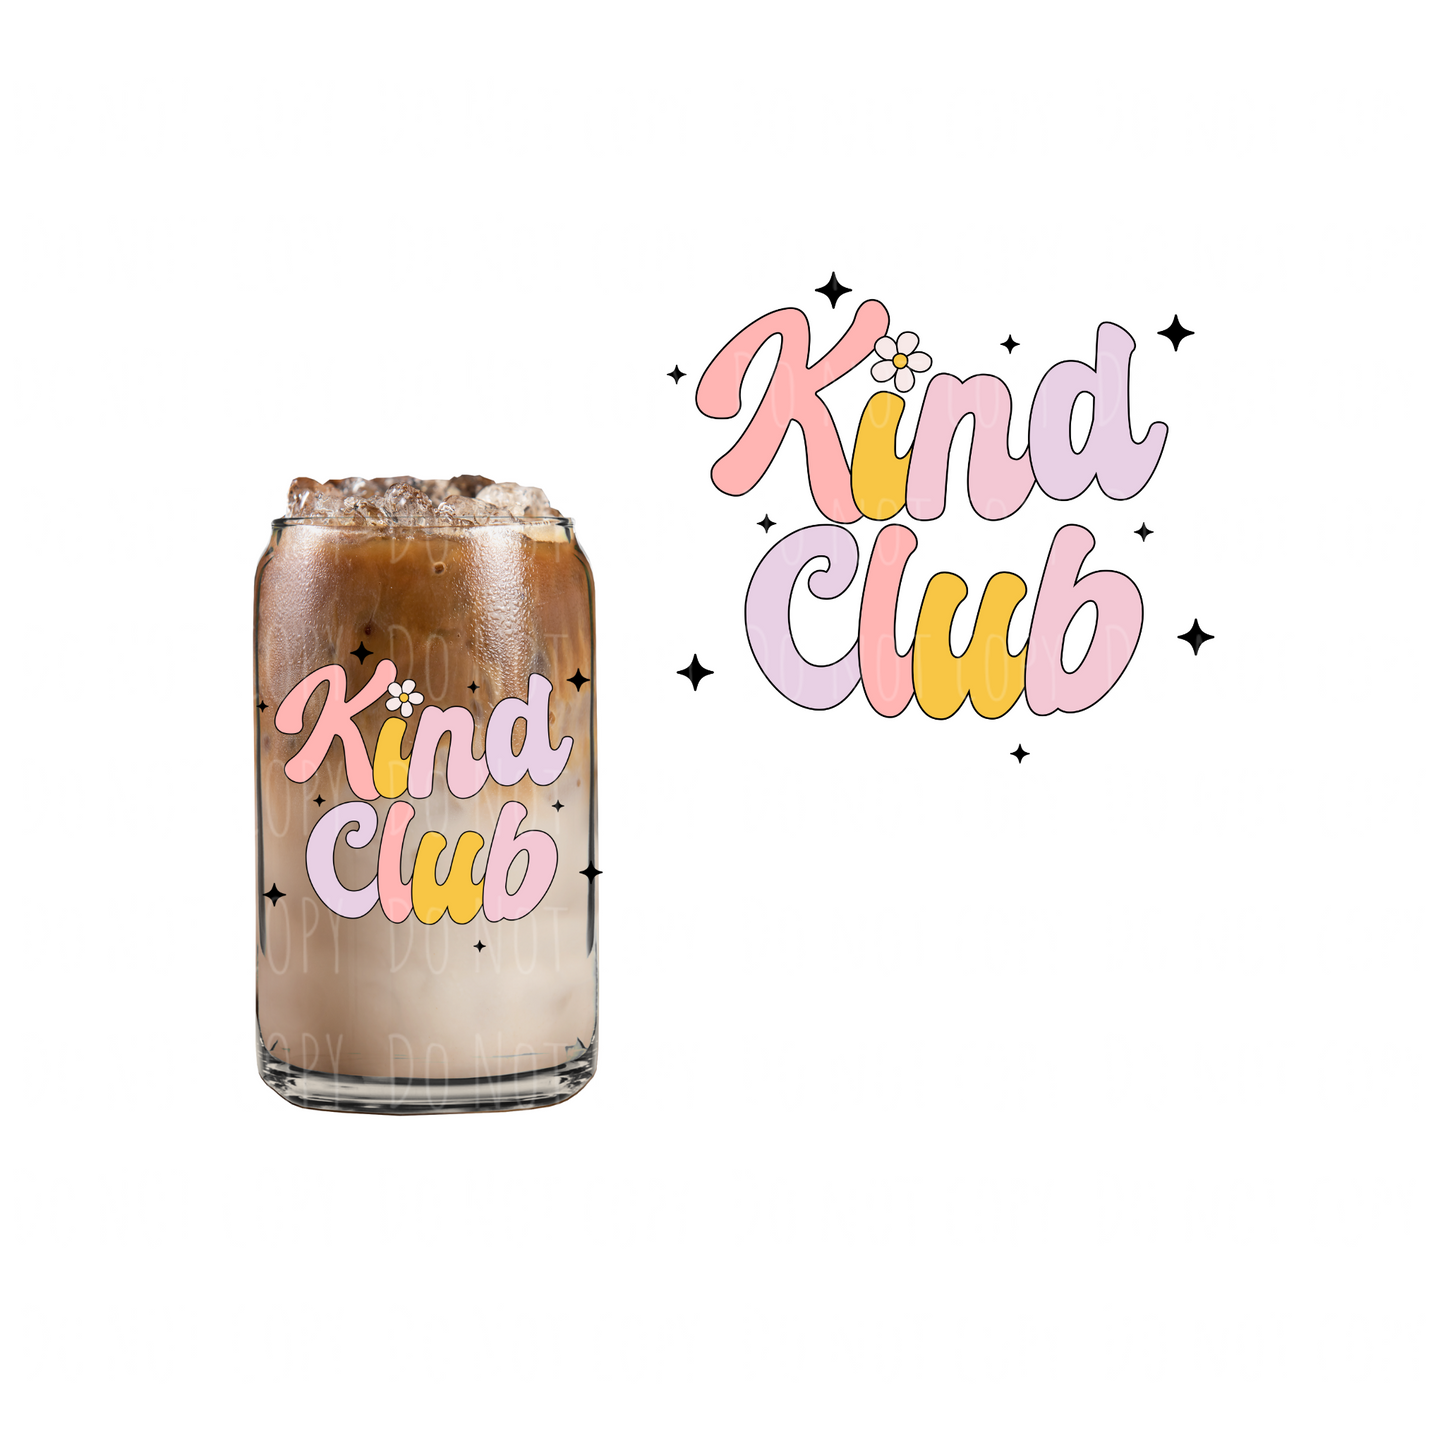 Kind Club UVDTF decal